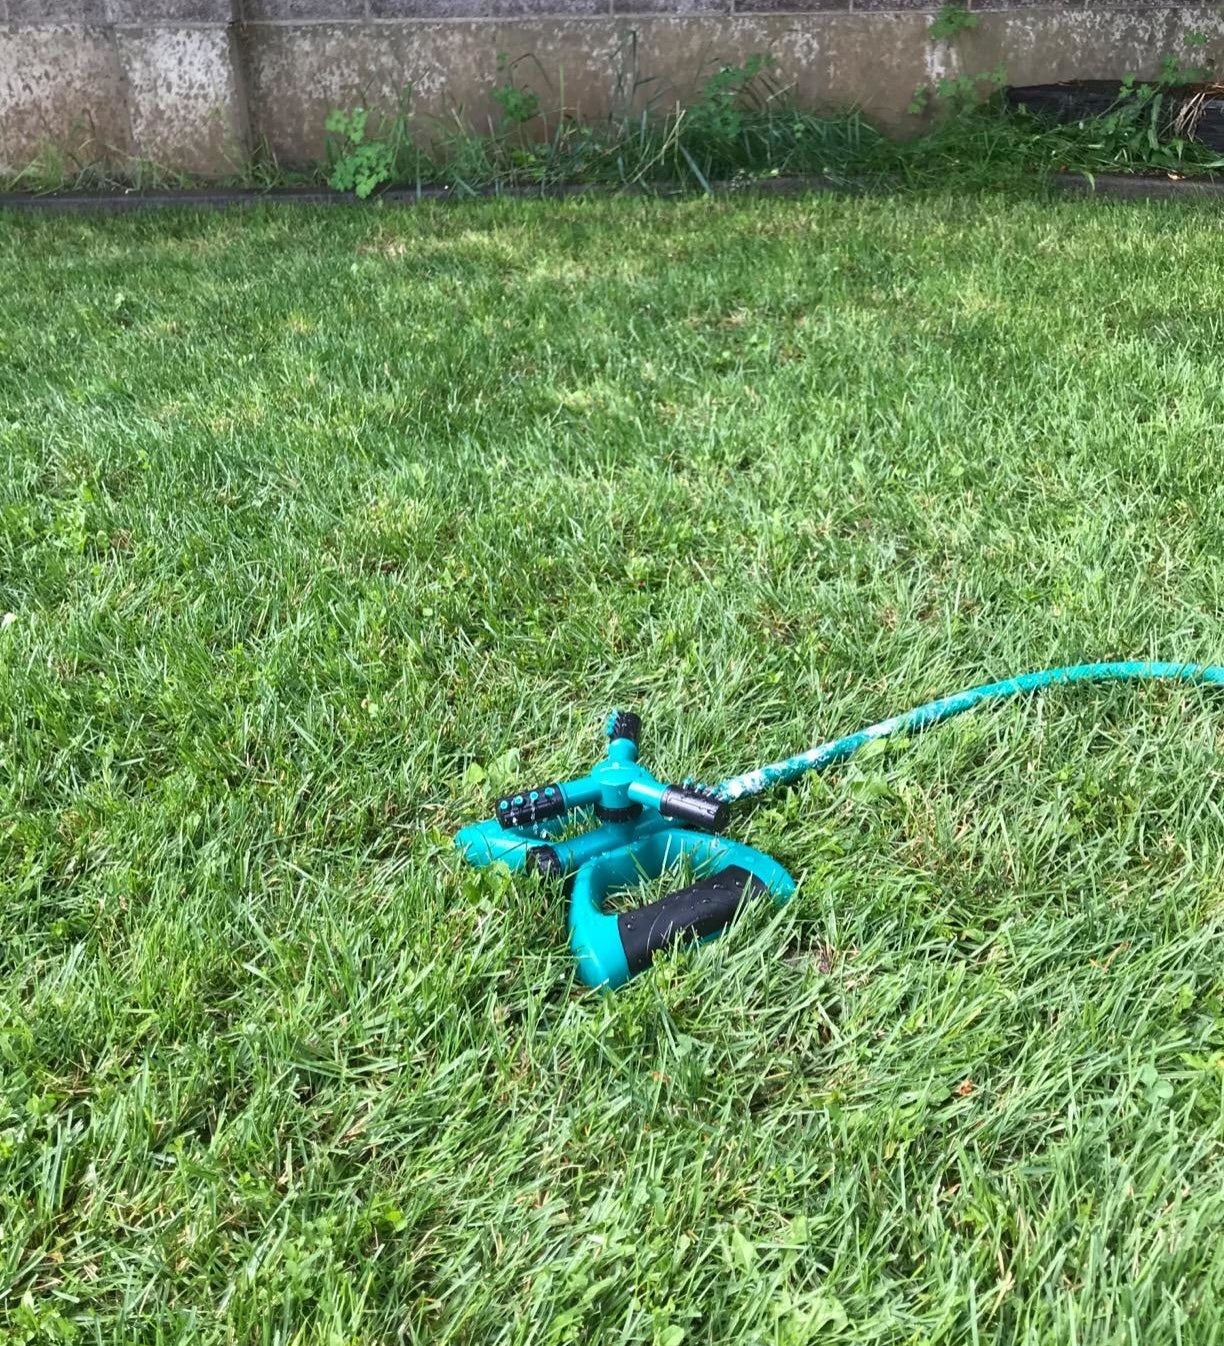 The sprinkler on grass